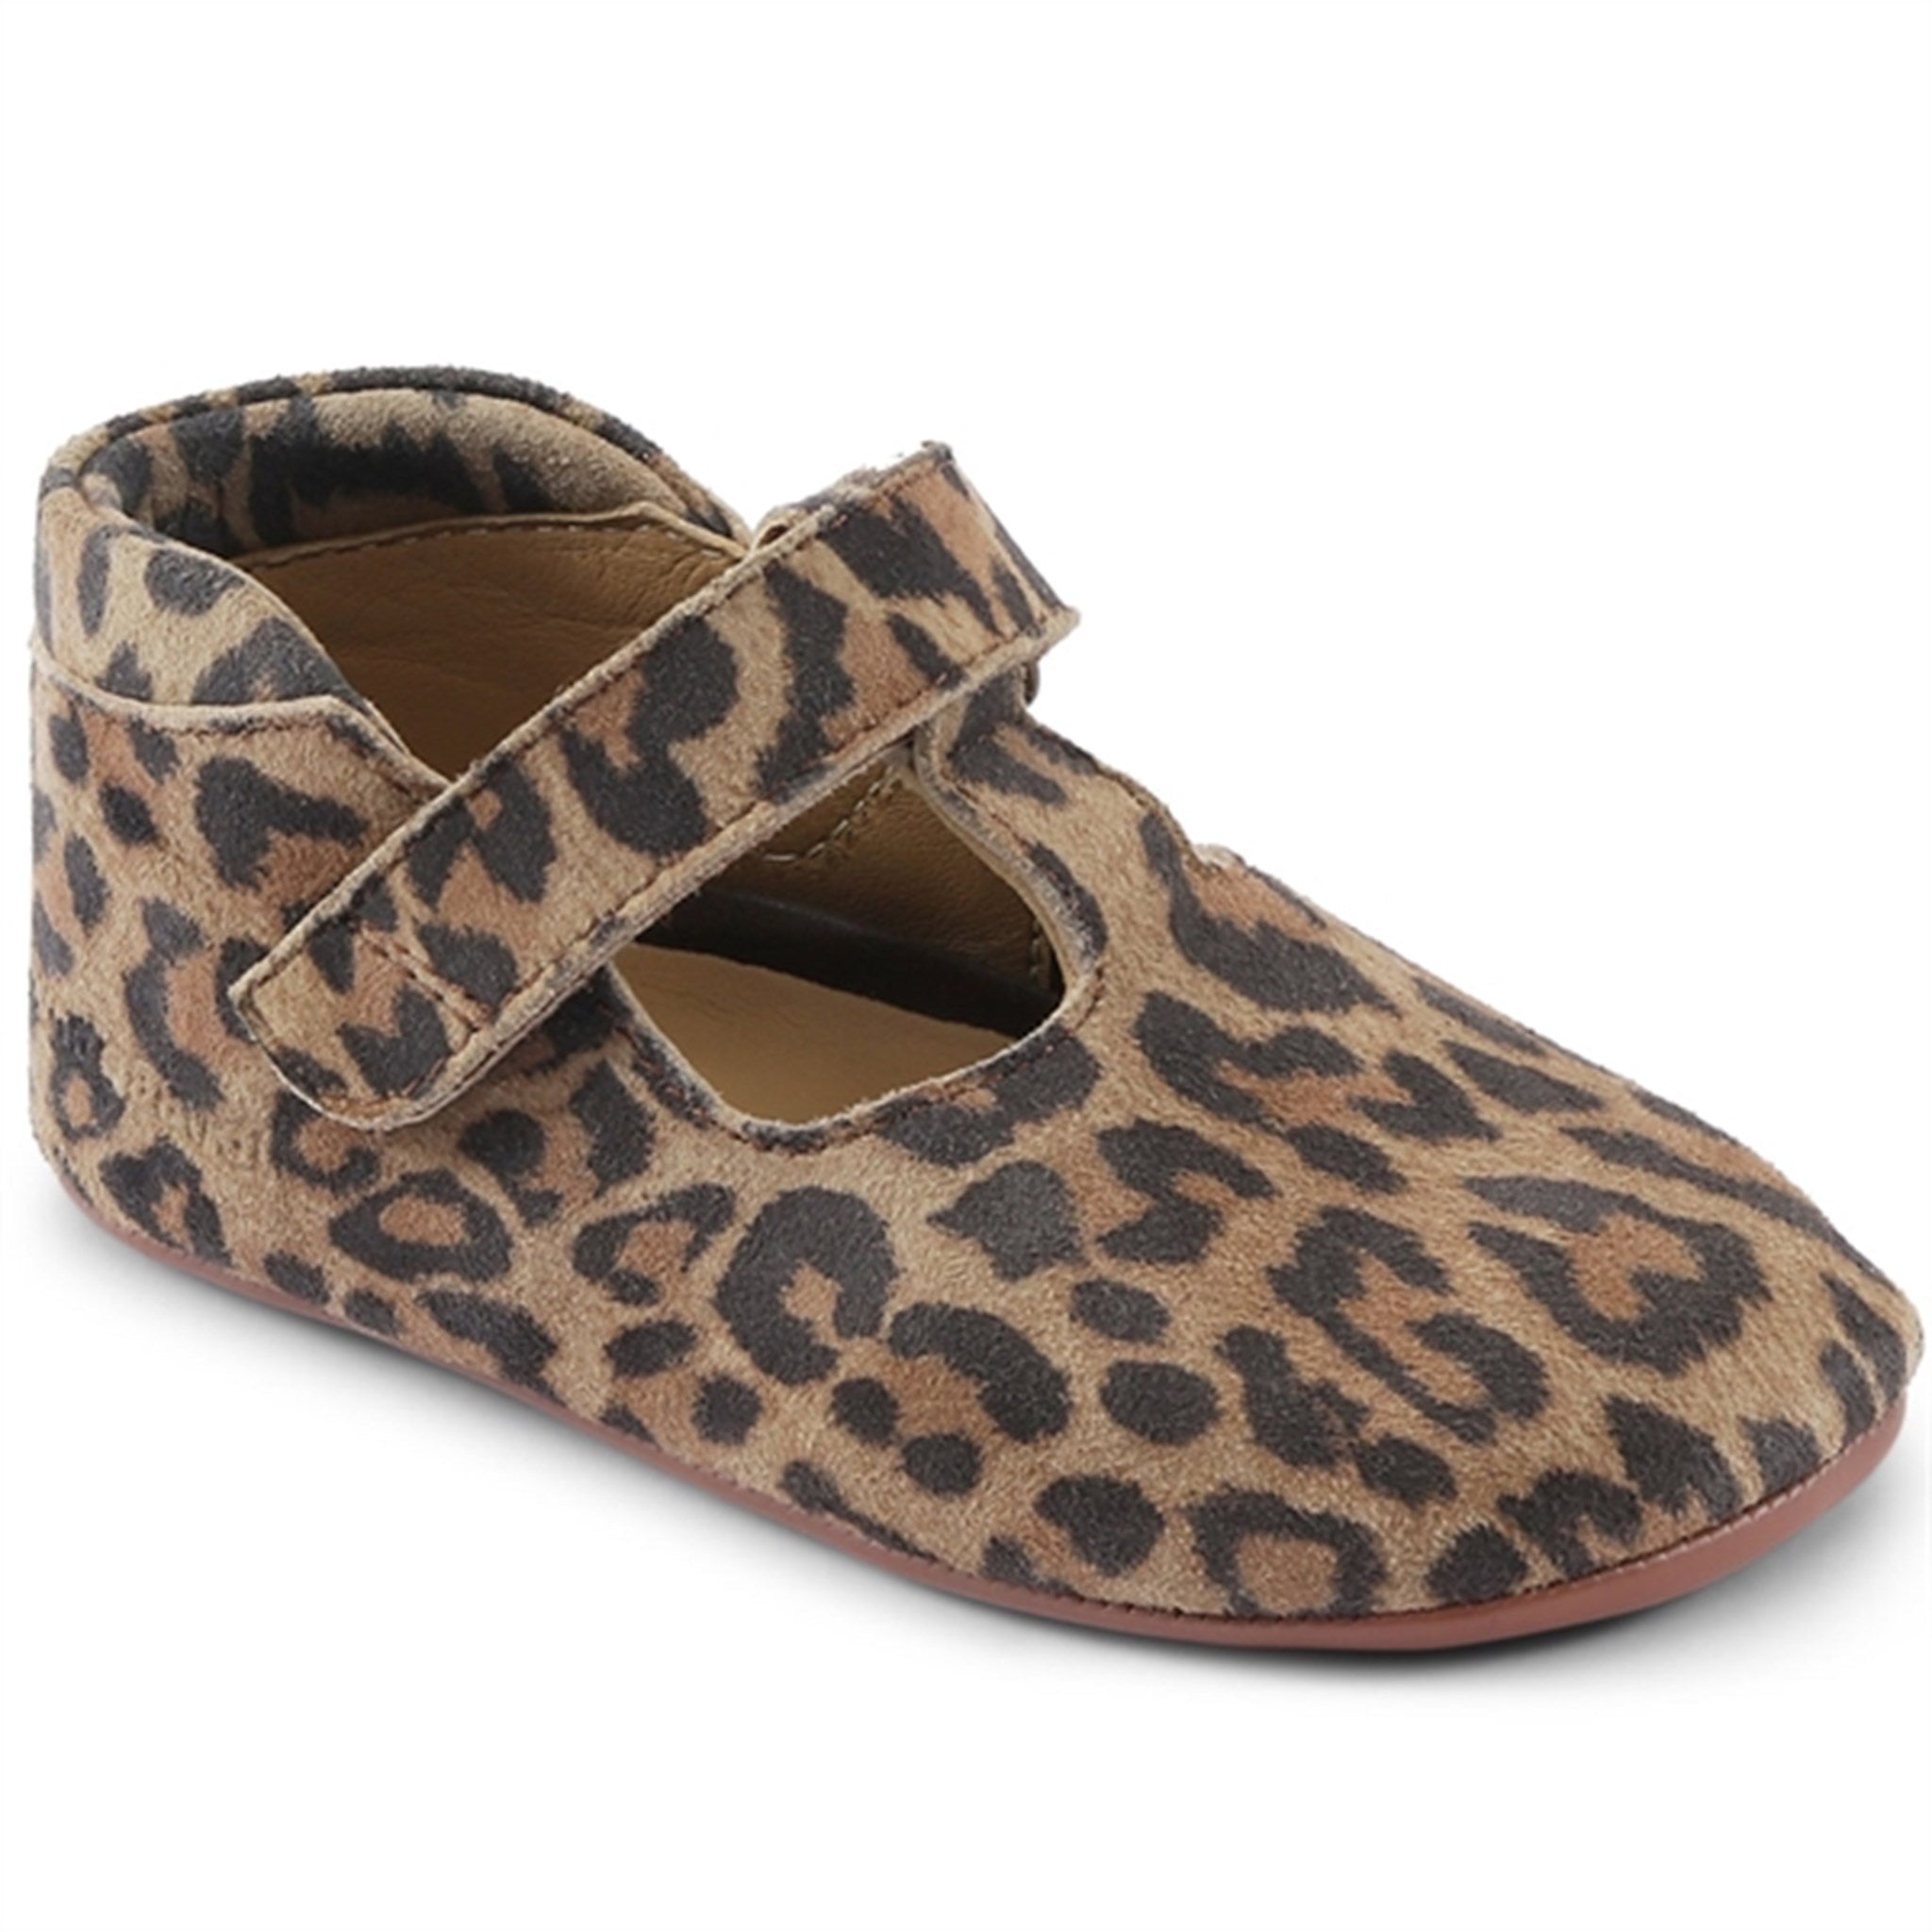 Bundgaard Mary ll Indoor Shoes Leopard